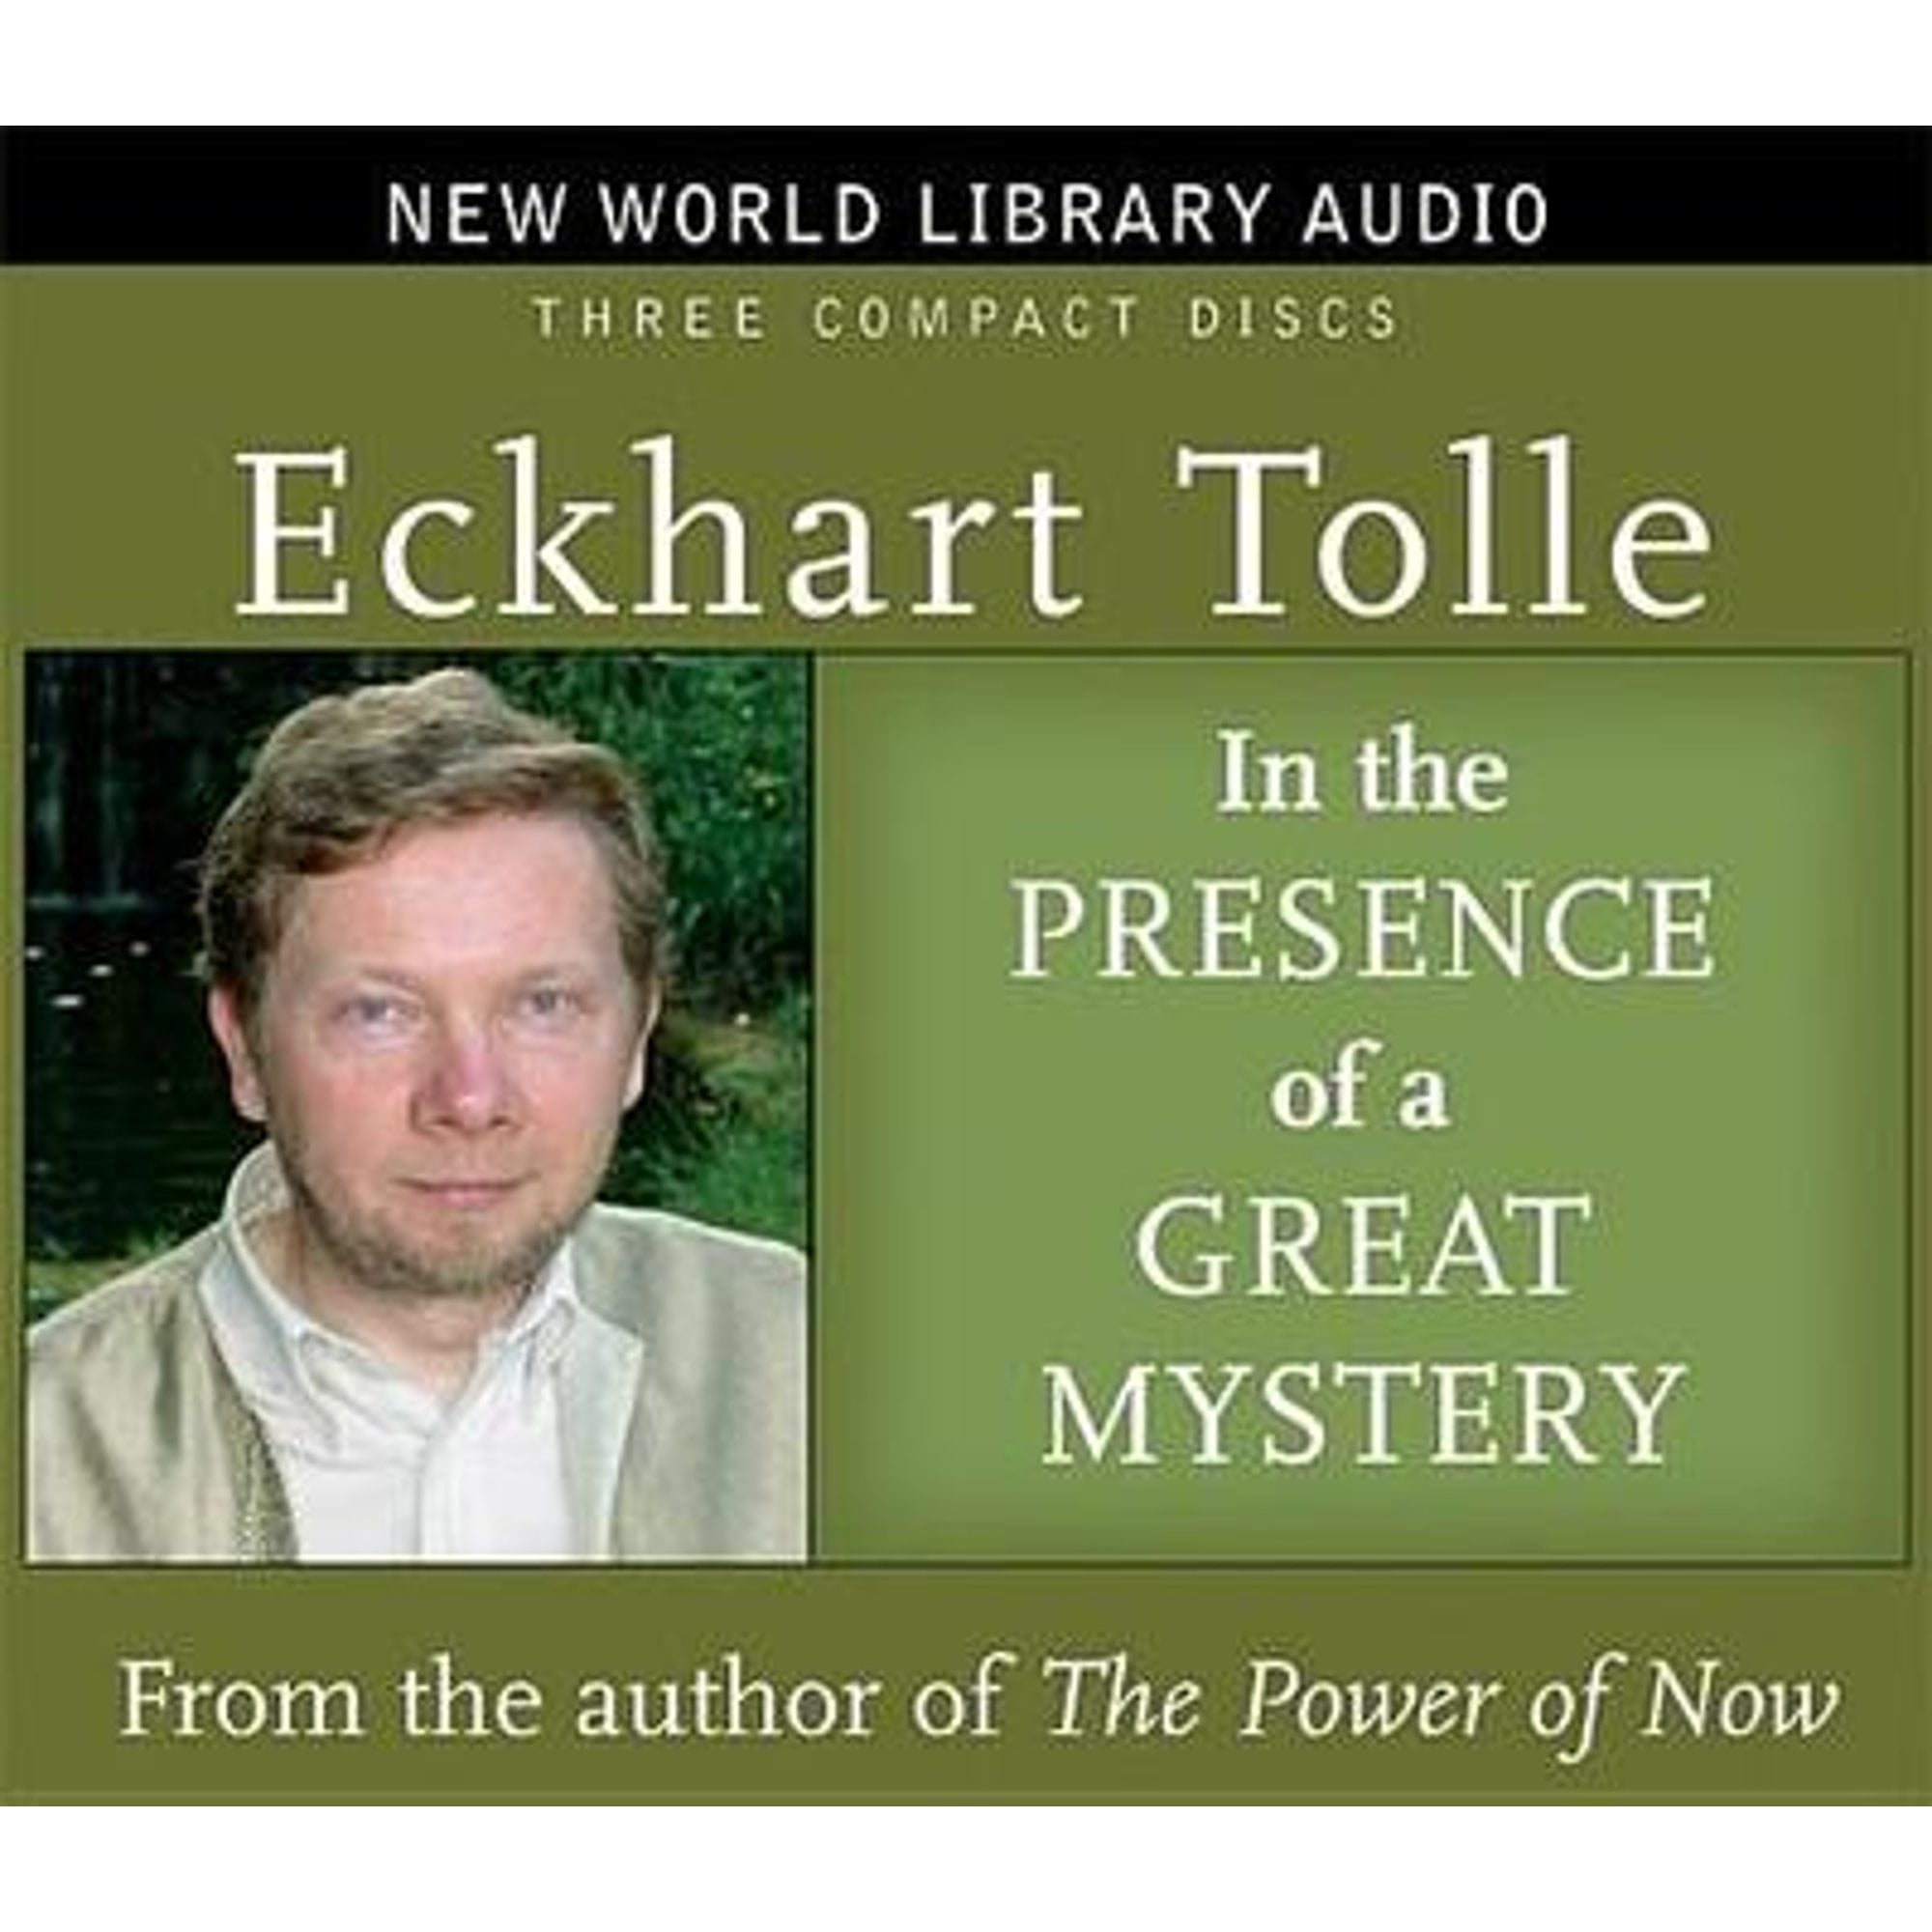 Great mystery. Экхарт Толле биография. Dear Mr.Eckhart tolle!. Пенелопа Экхарт читает книгу в саду.